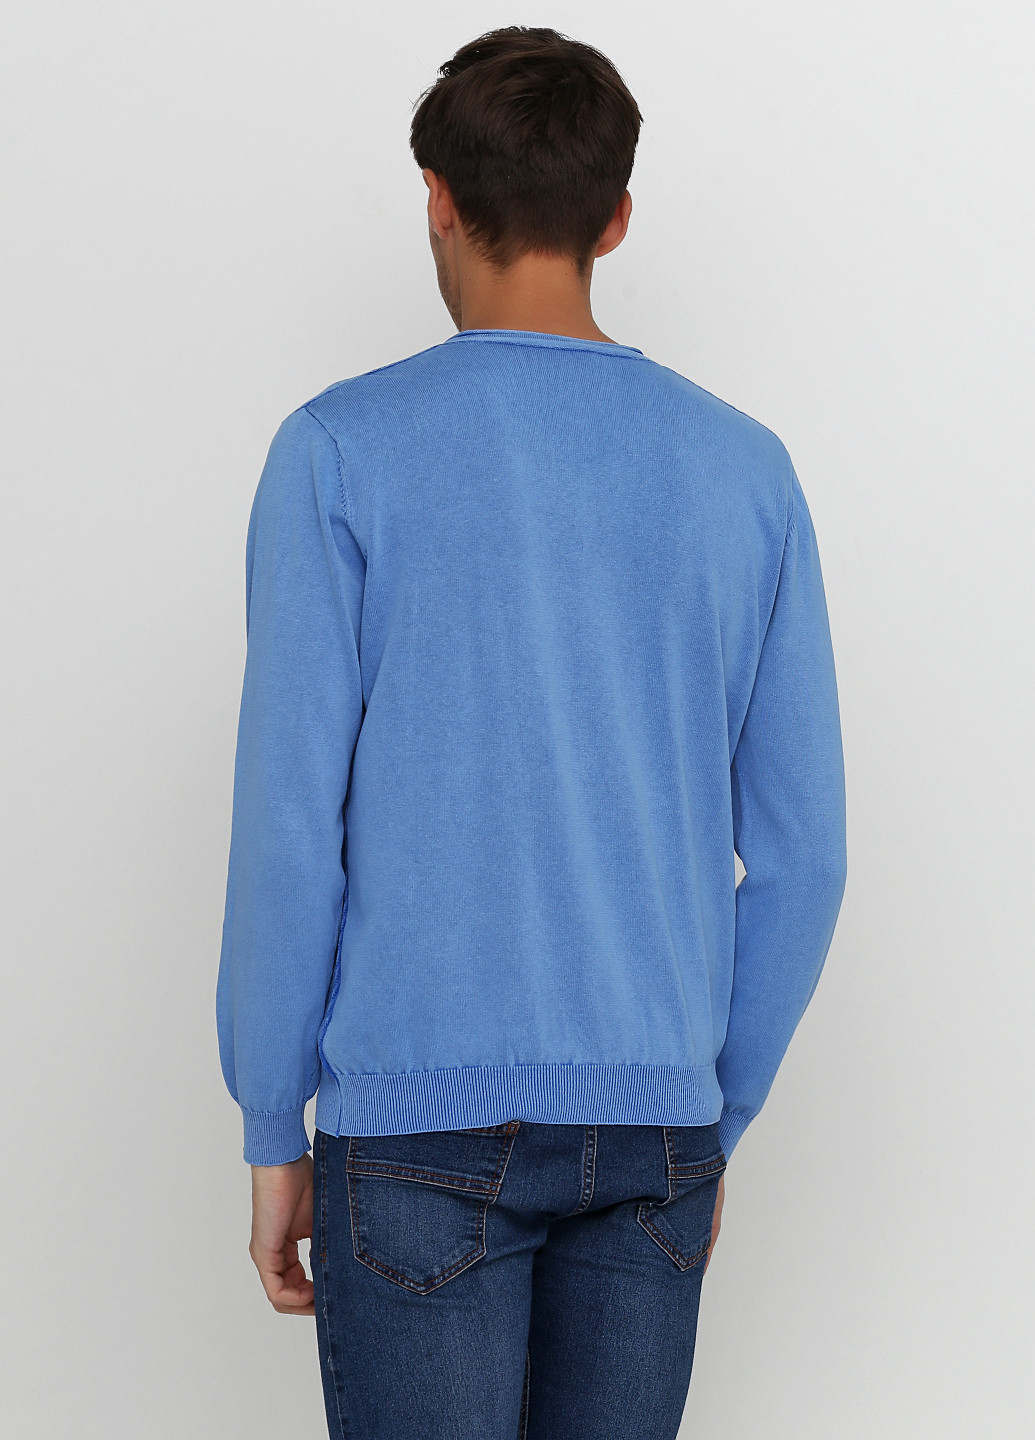 Голубой демисезонный пуловер пуловер Cashmere Company